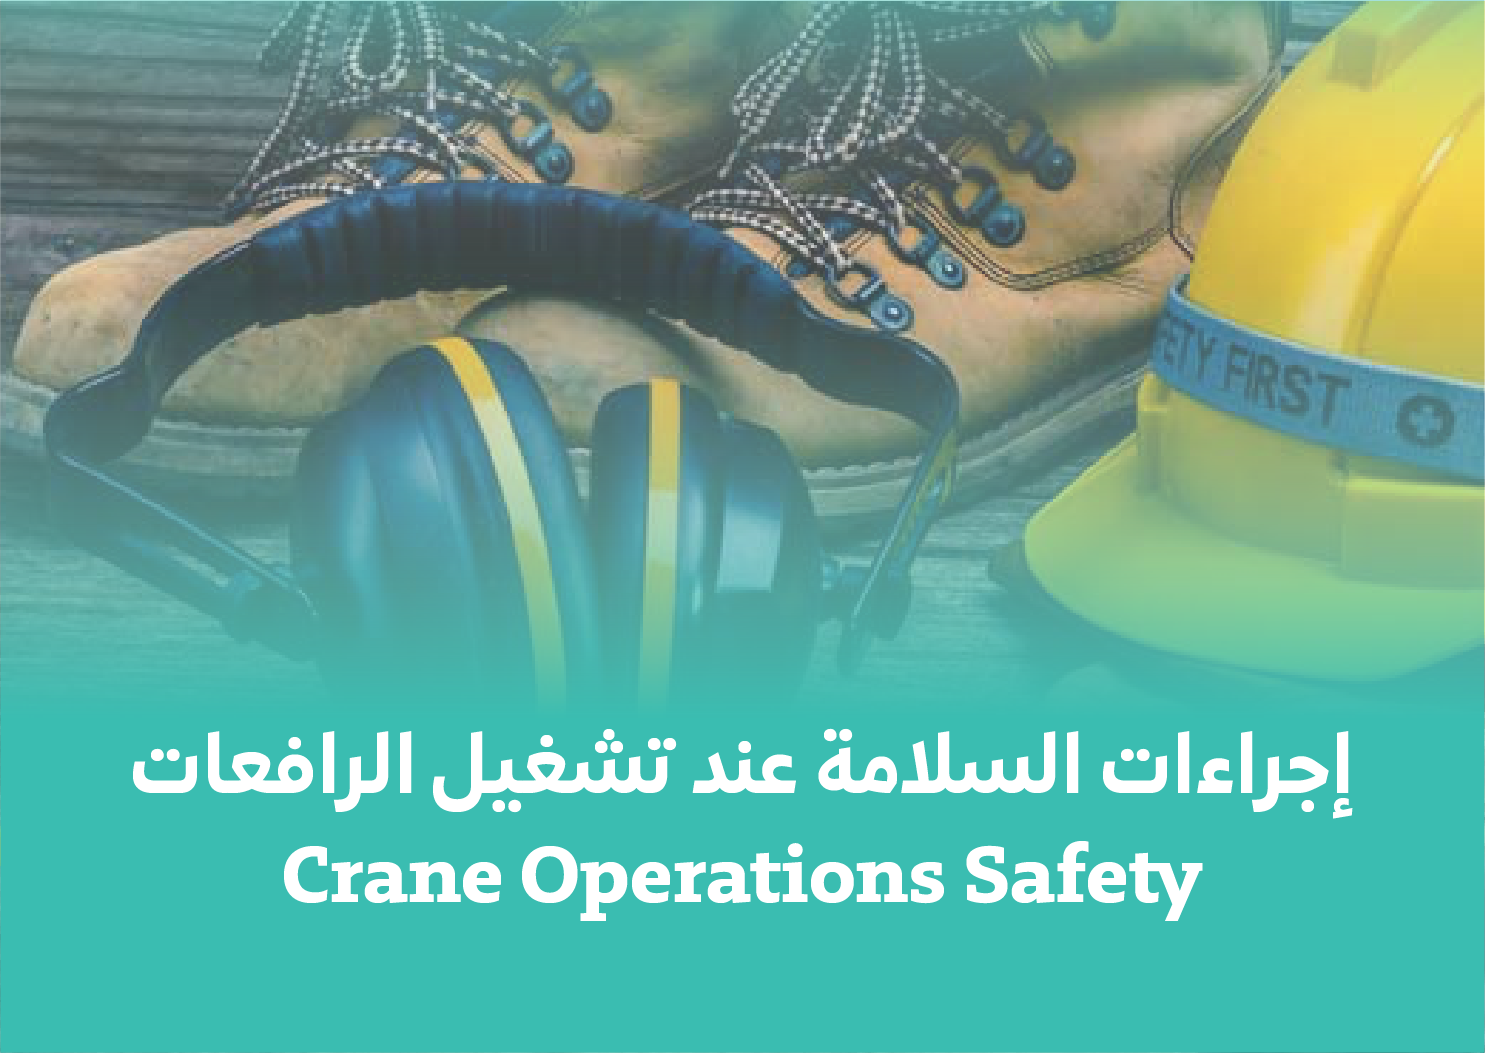 Crane Operations Safety